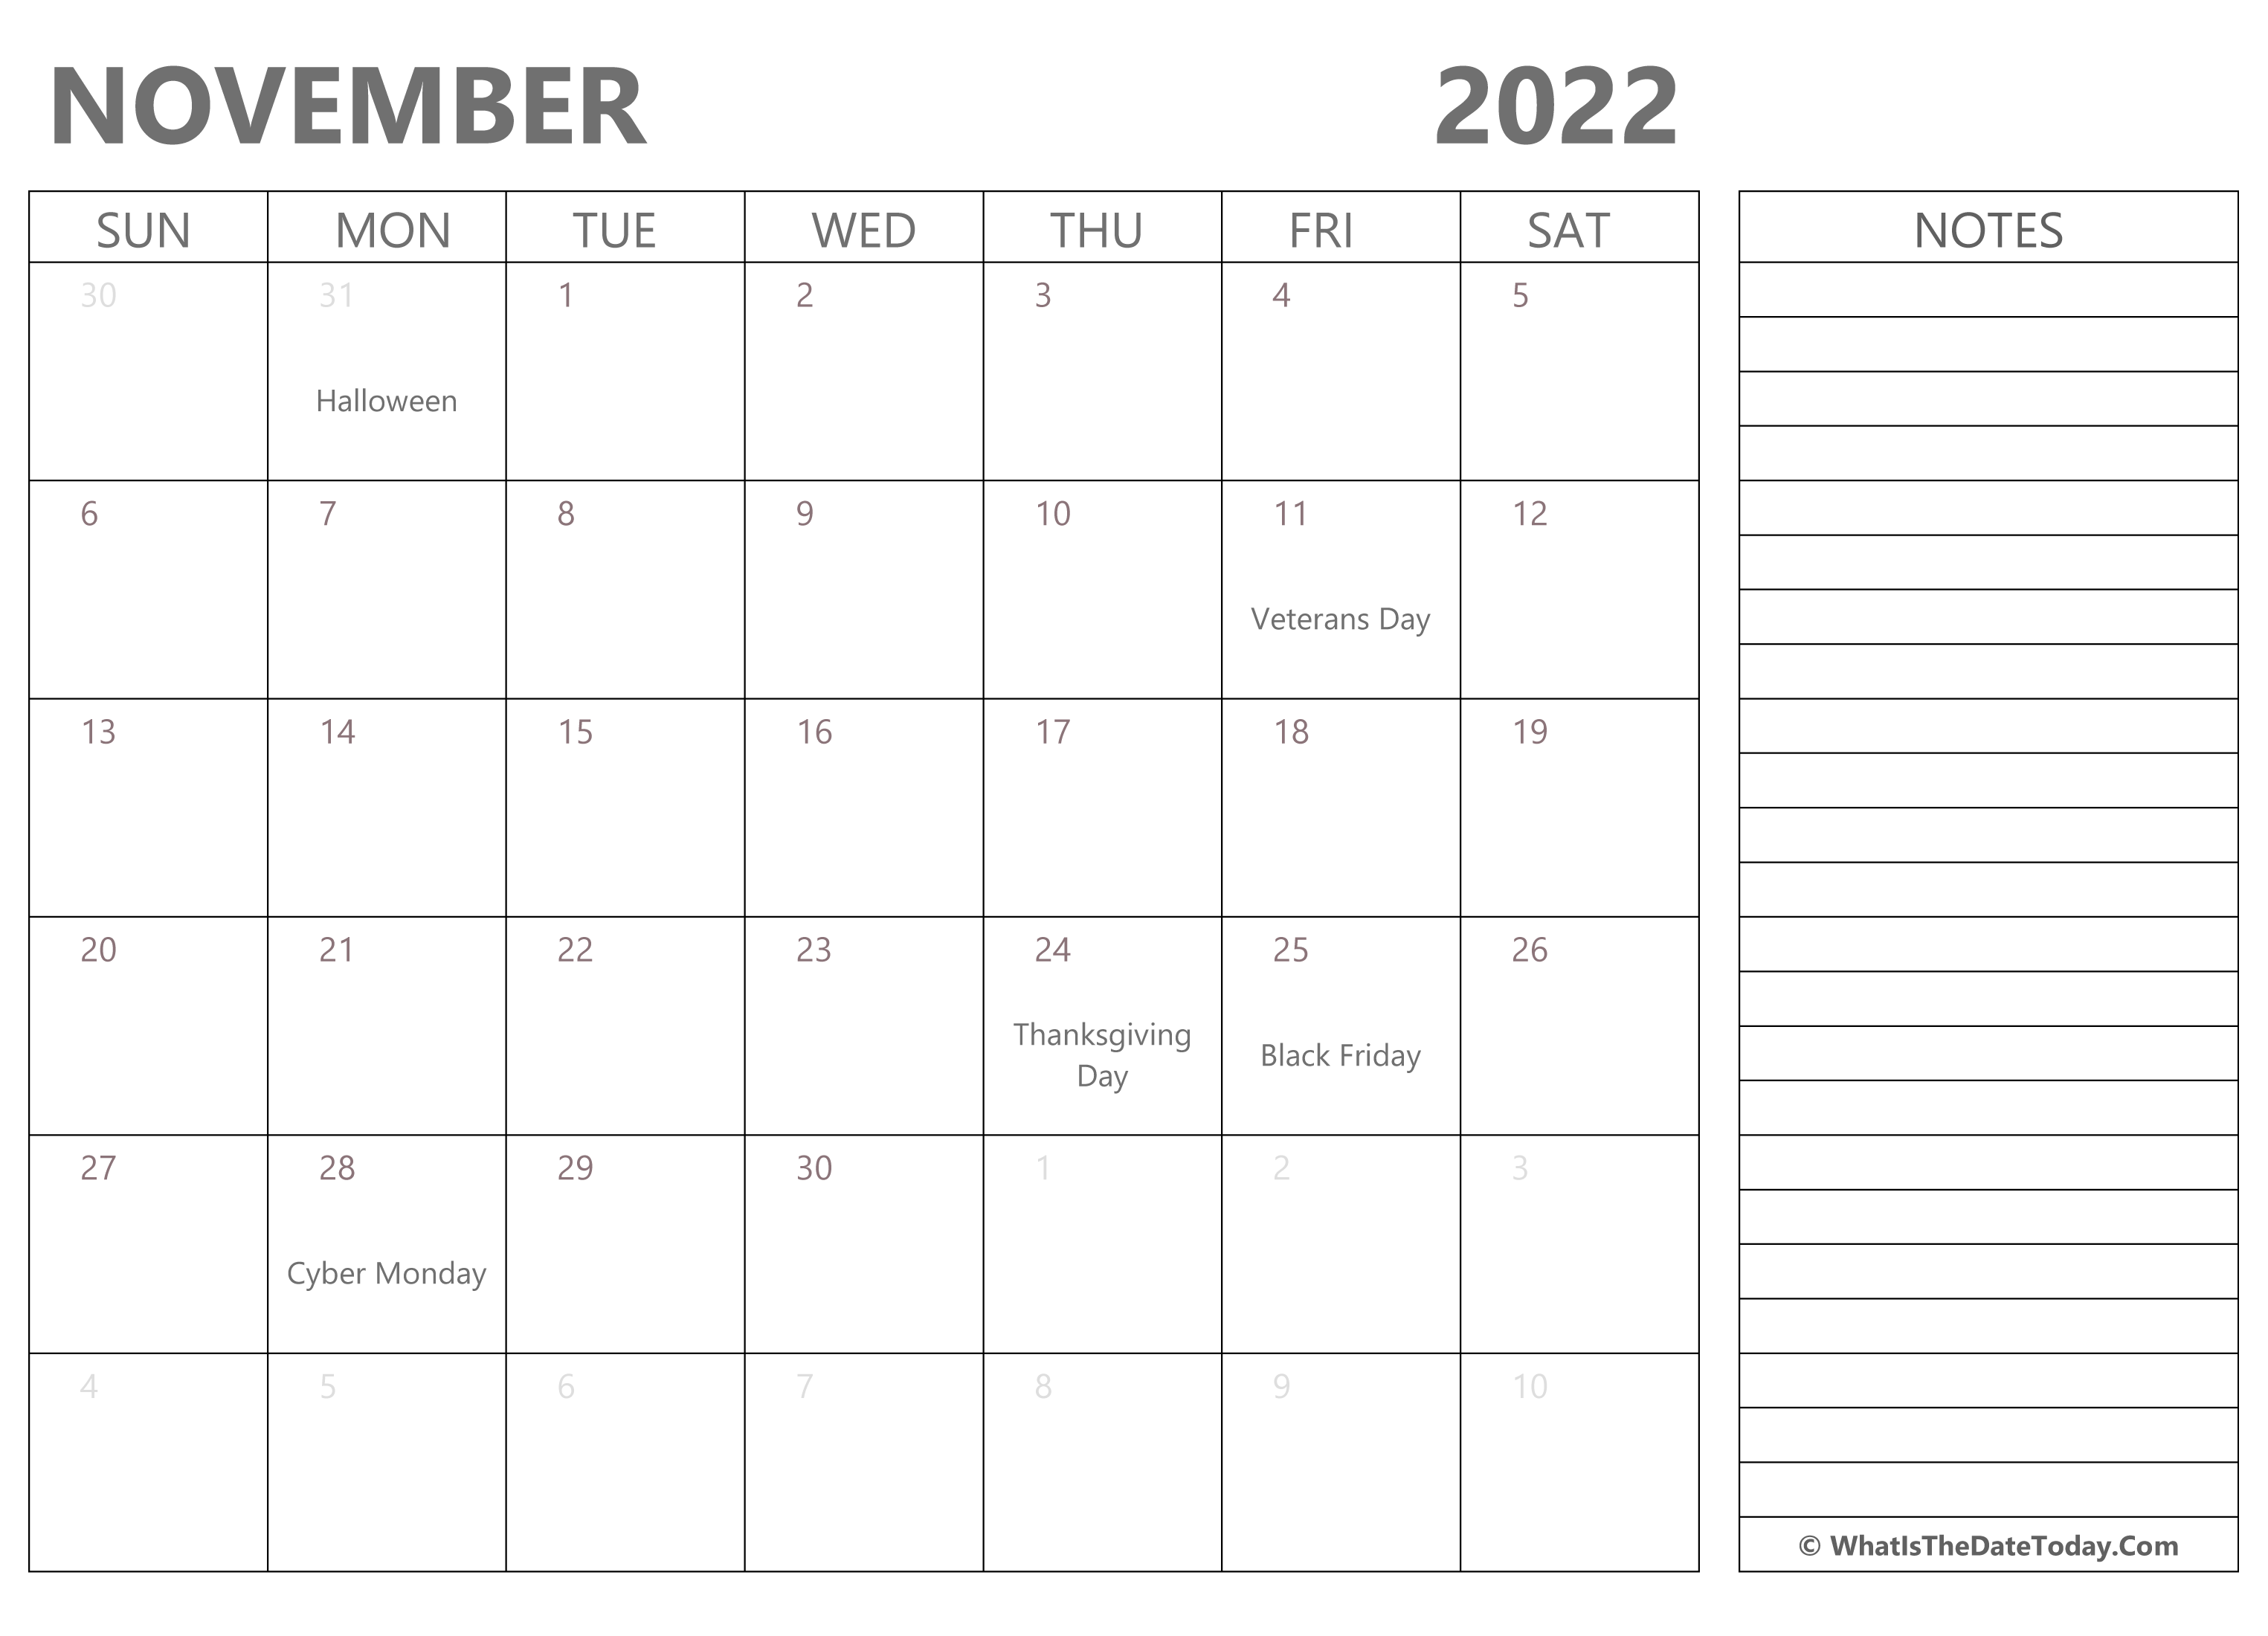 Editable Calendar November 2022 Editable November 2022 Calendar With Holidays And Notes |  Whatisthedatetoday.com